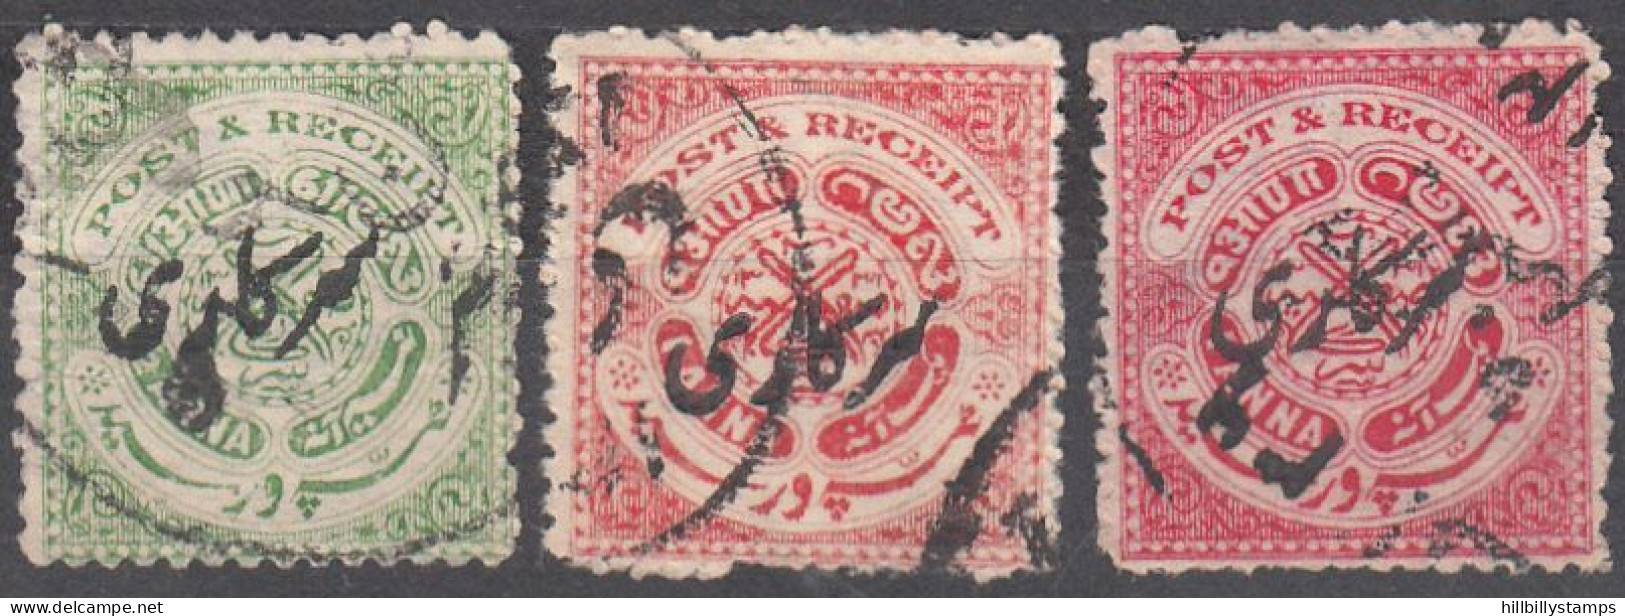 INDIA-HYDERABAD  SCOTT NO 041-43  USED   YEAR  1917 - Hyderabad